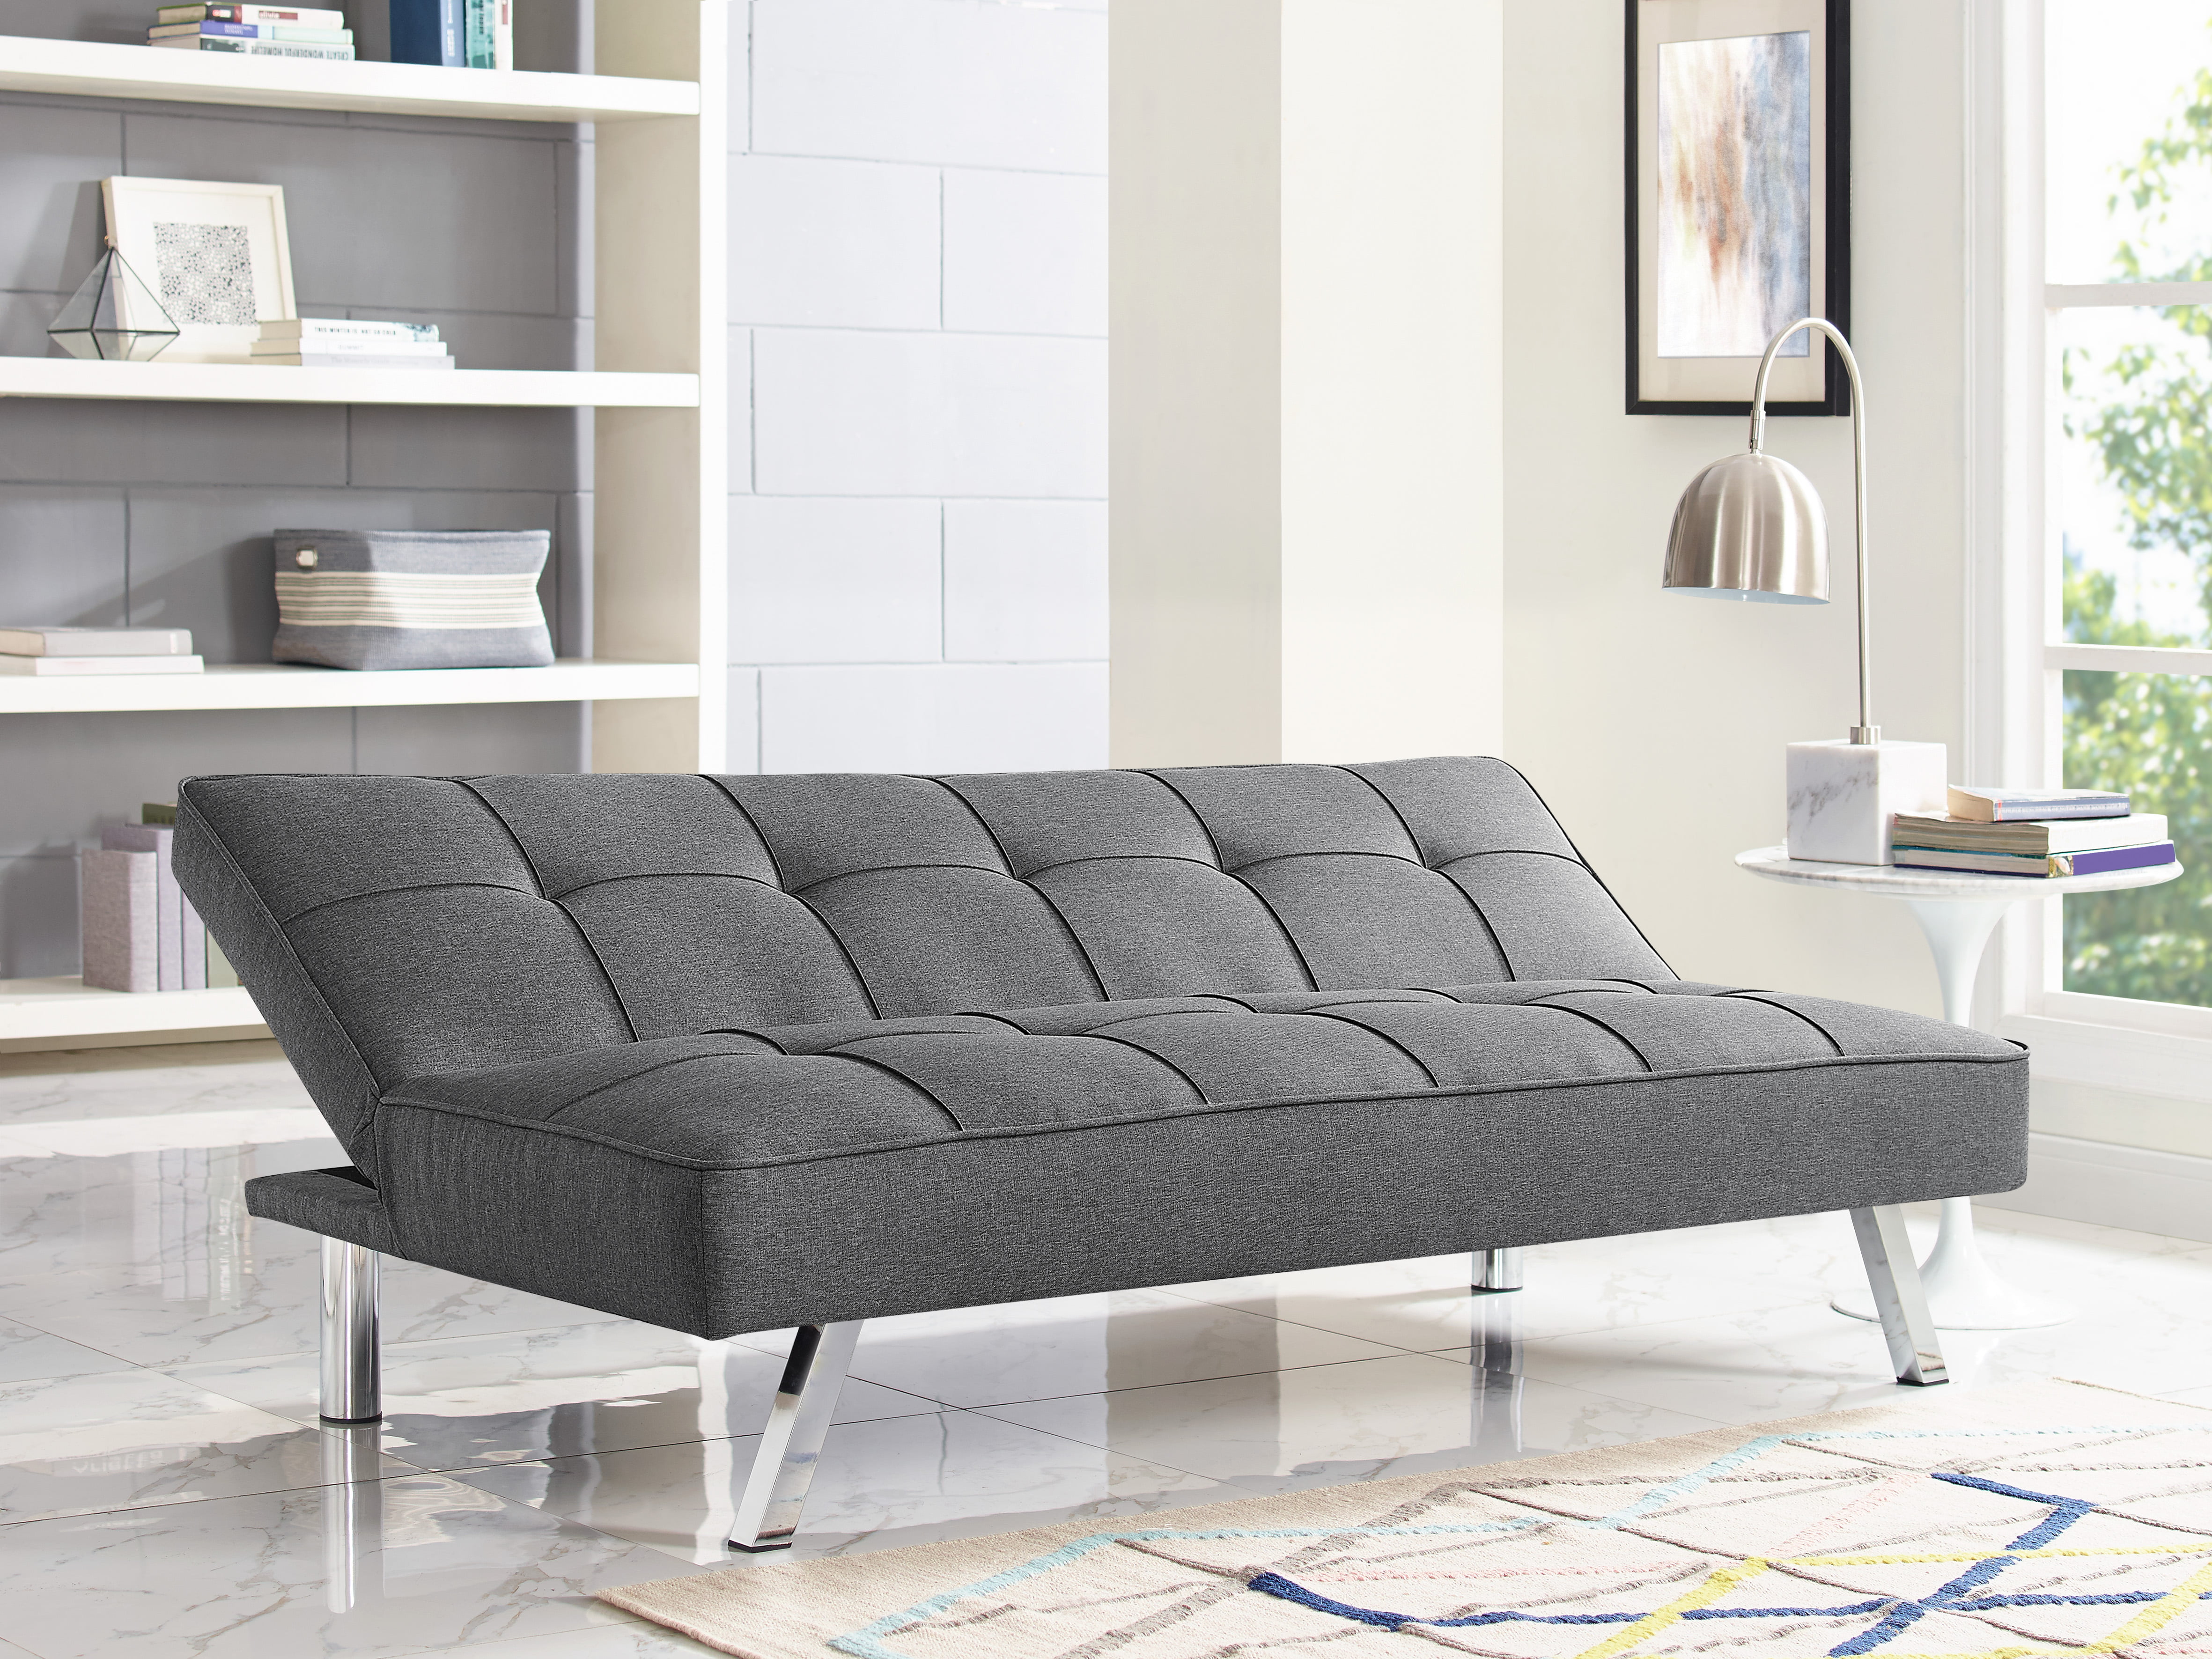 chelsea leather convertible sofa